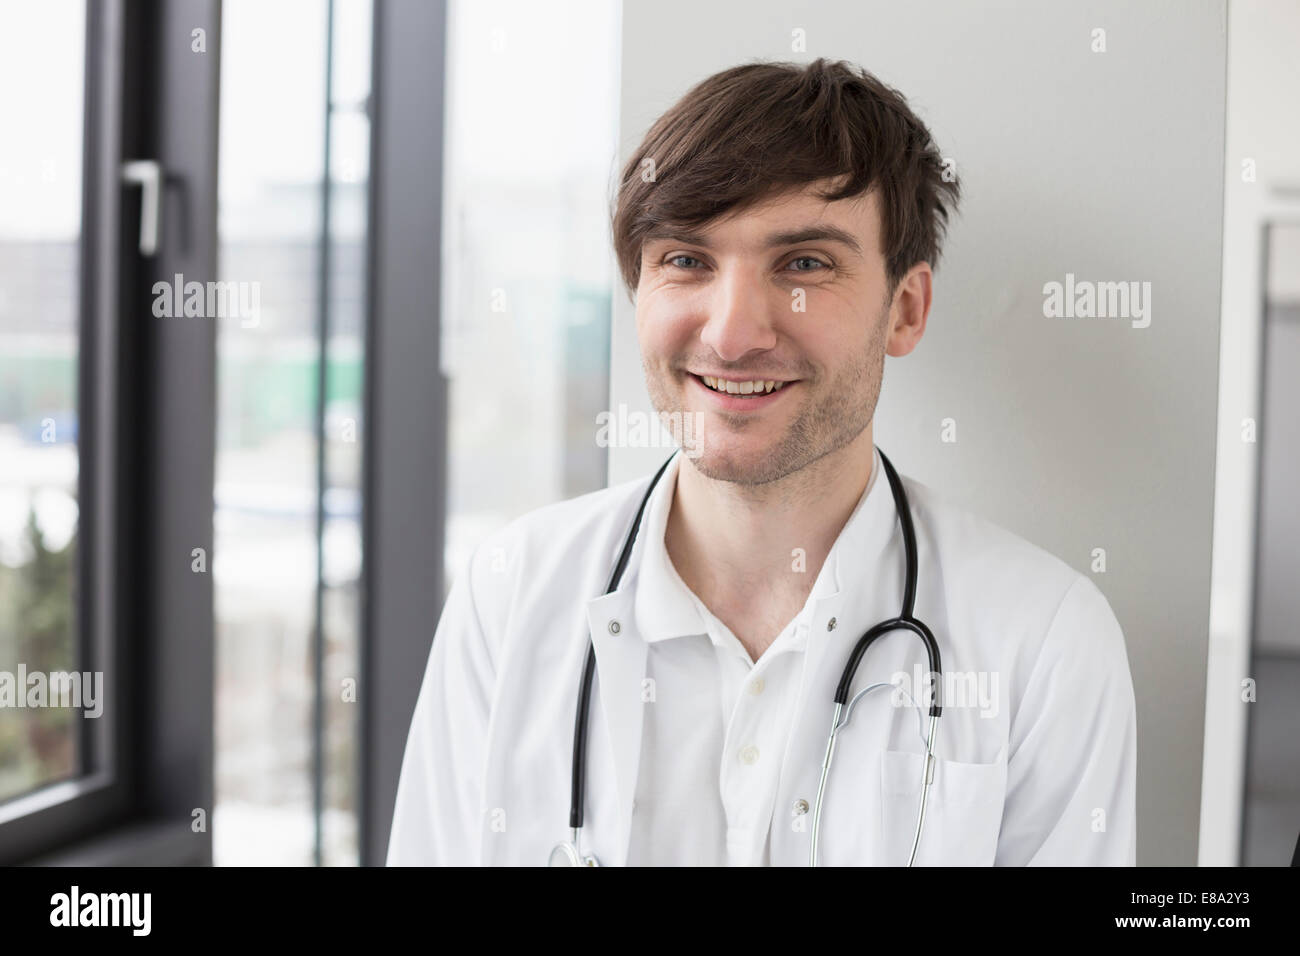 Doctor smiling, portrait Stock Photo - Alamy